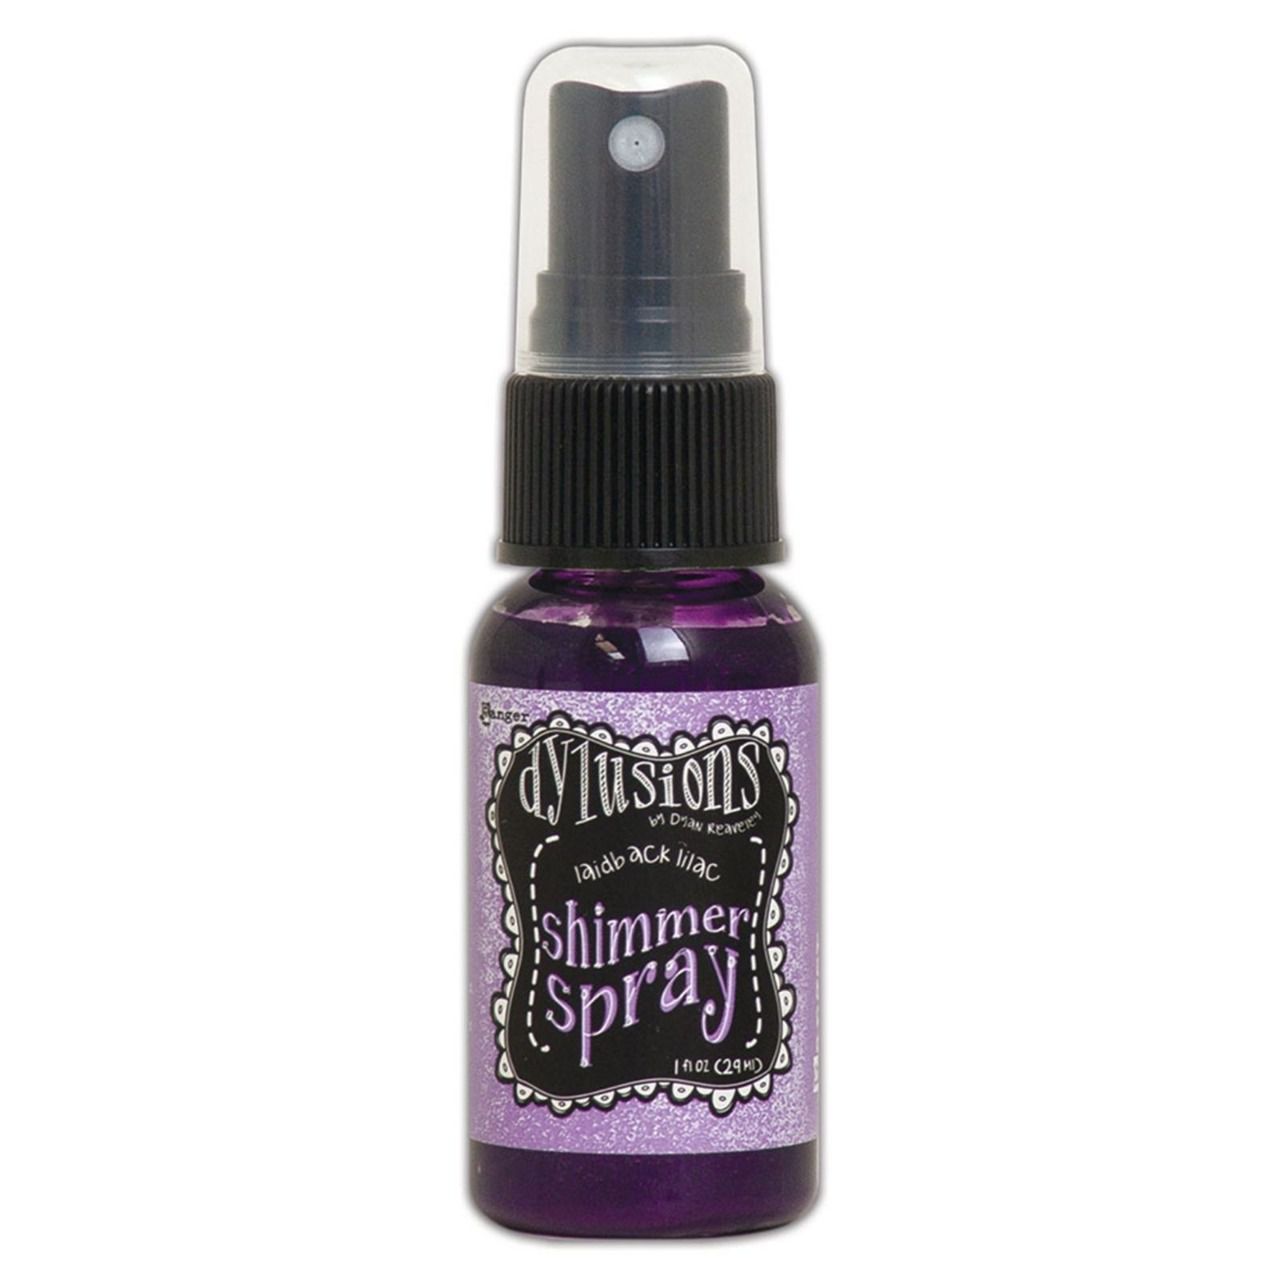 Shimmer Spray Dylusions - Laidback lilac - 29ml